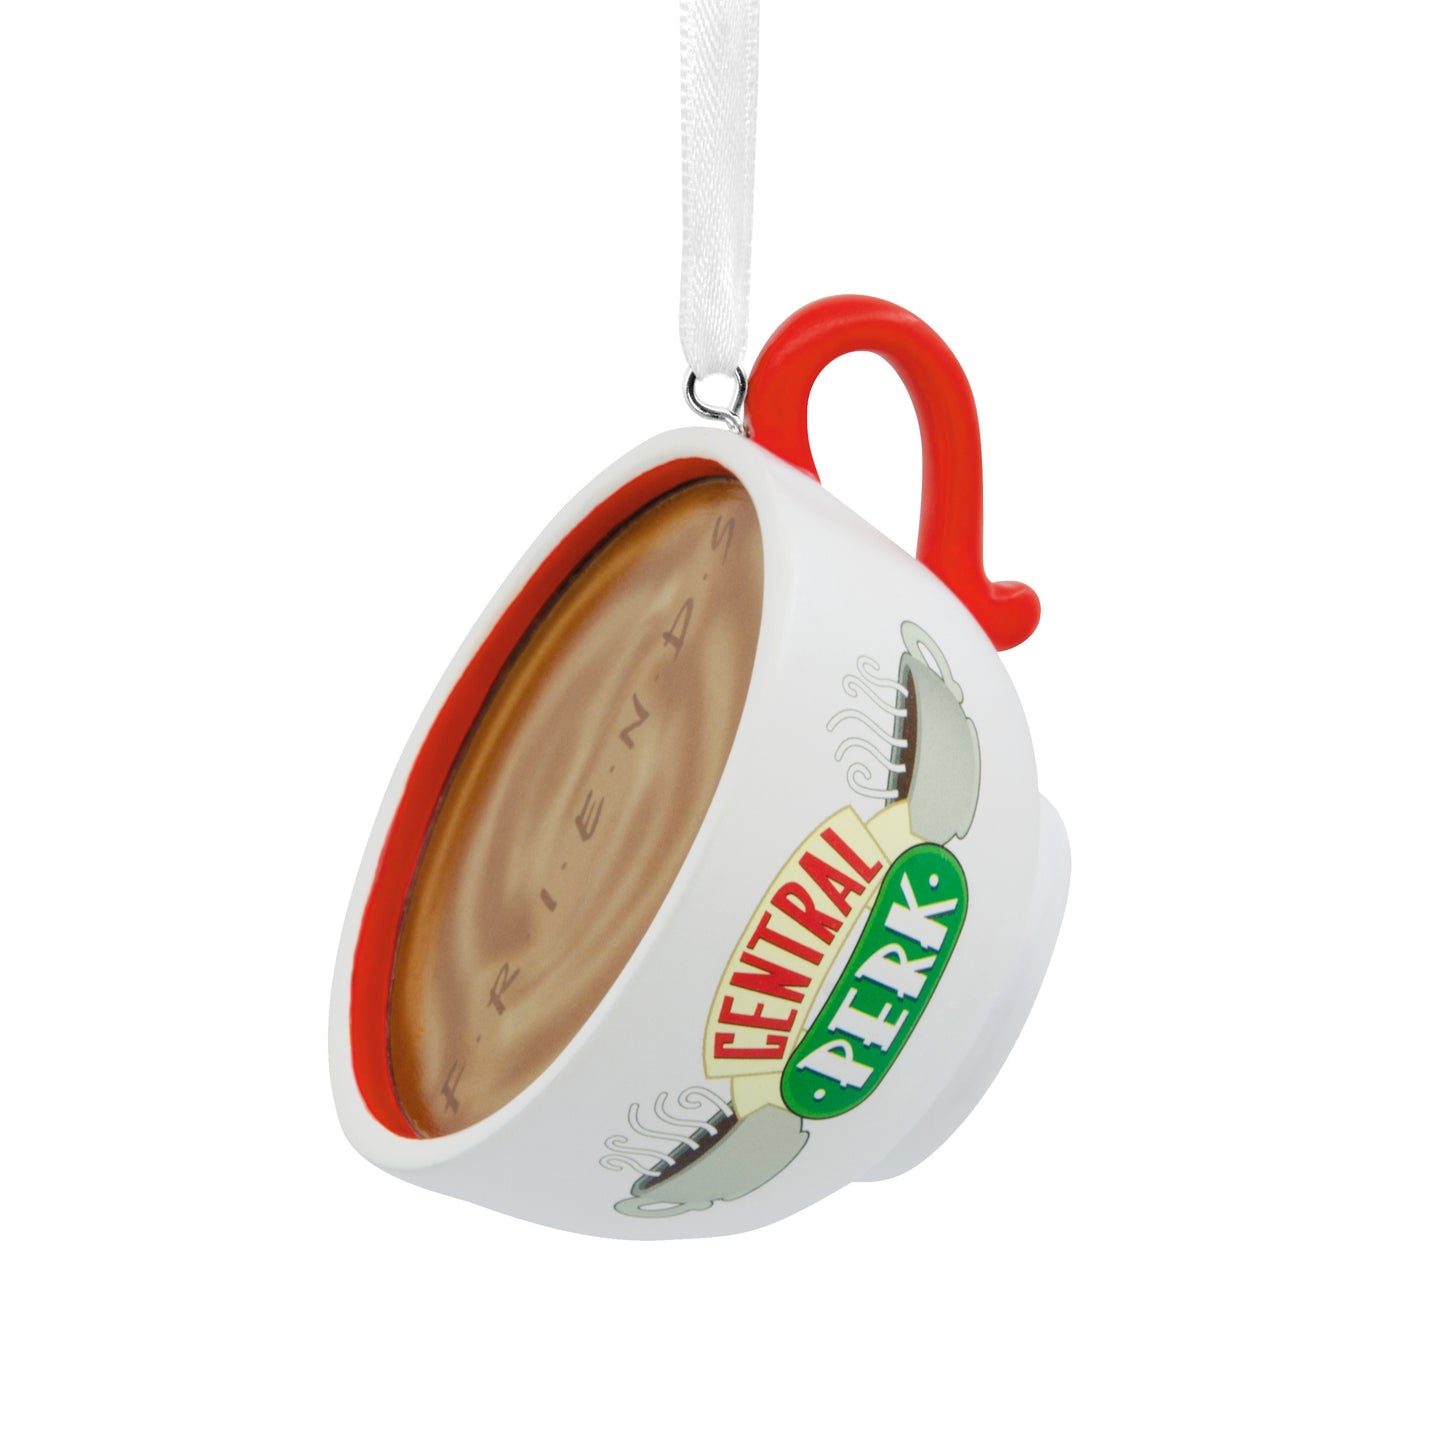 Friends - Coffee Mug Ornament